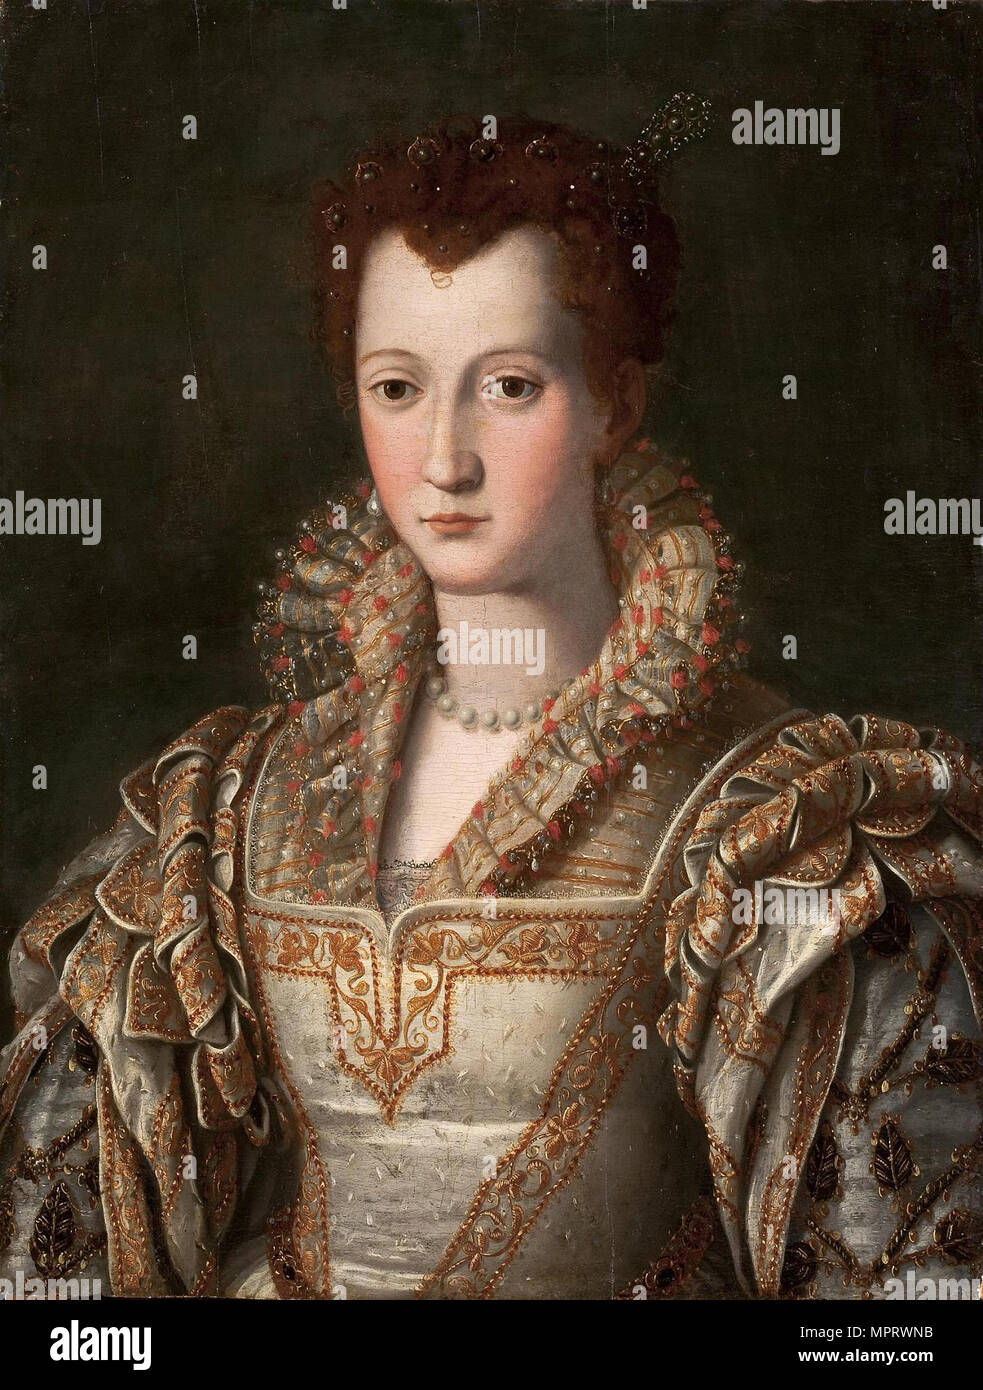 Portrait of Eleanor of Toledo (1522-1562), wife of Grand Duke Cosimo I de' Medici. Stock Photo